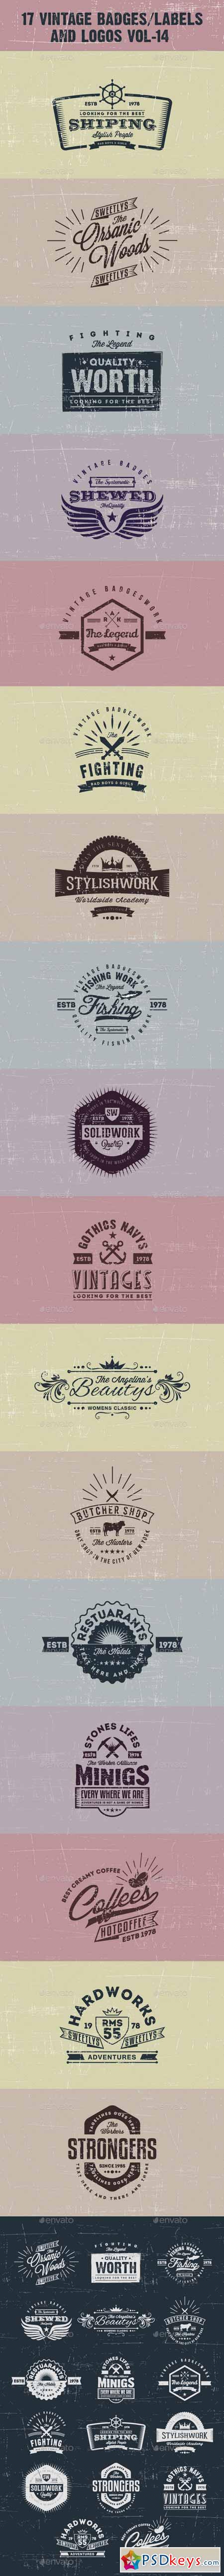 17 Vintage Badges labels and Logos Vol-14 9938664